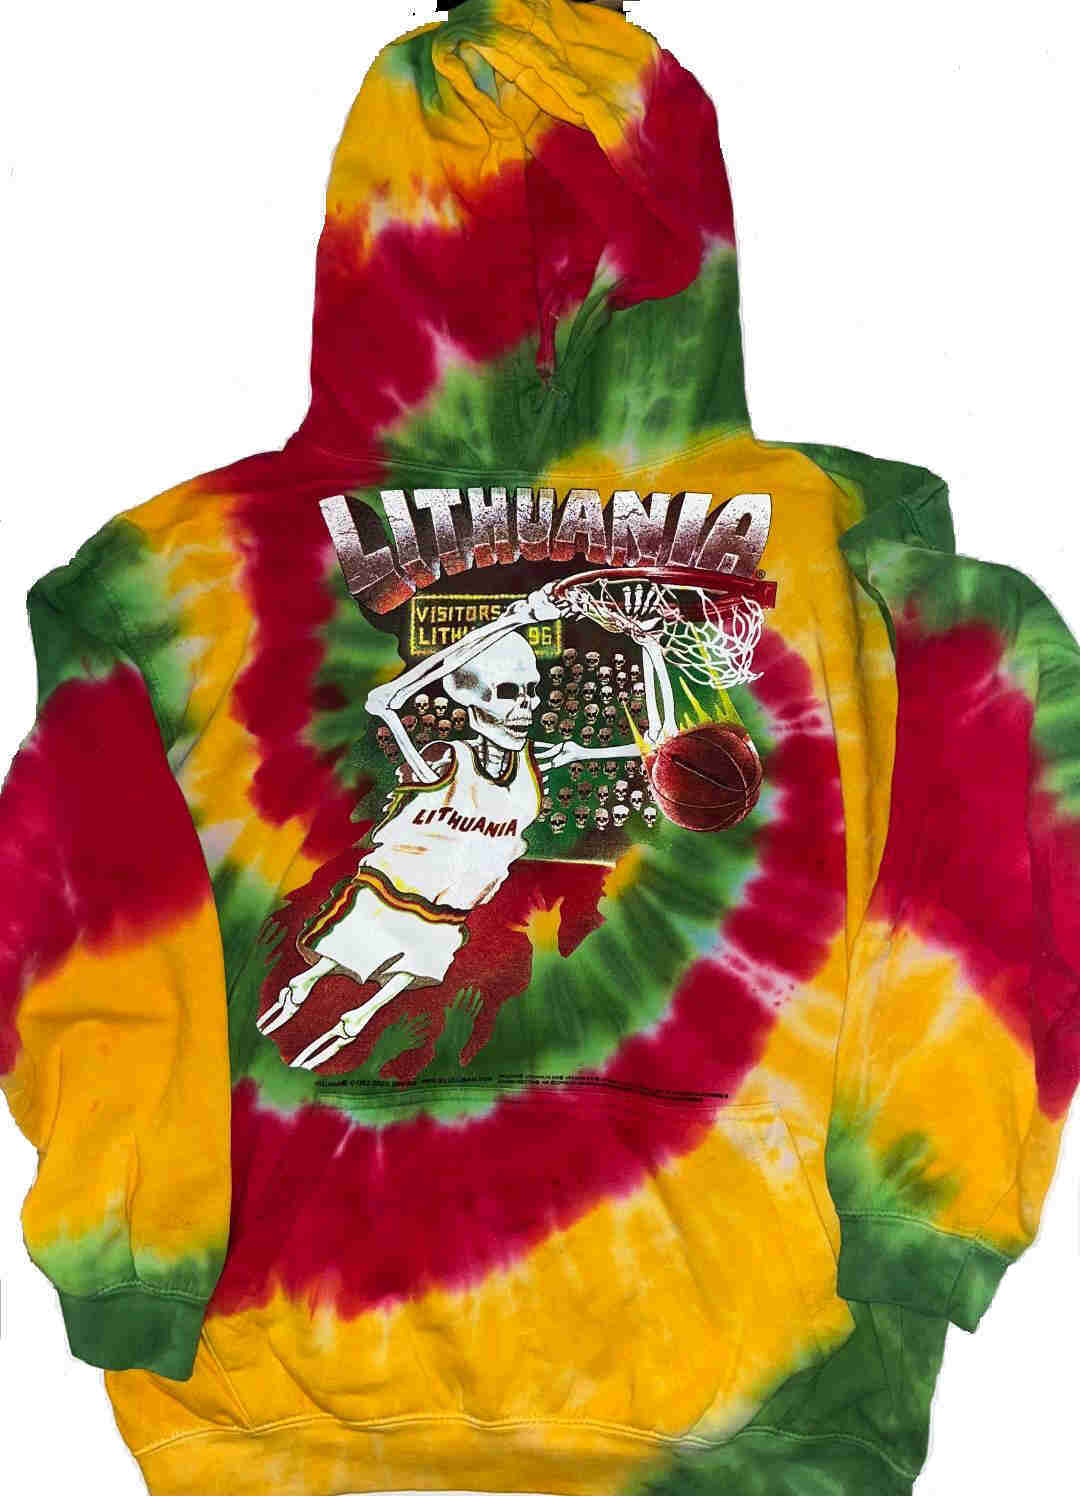 Lithuania tie dye hoodies and tshirts